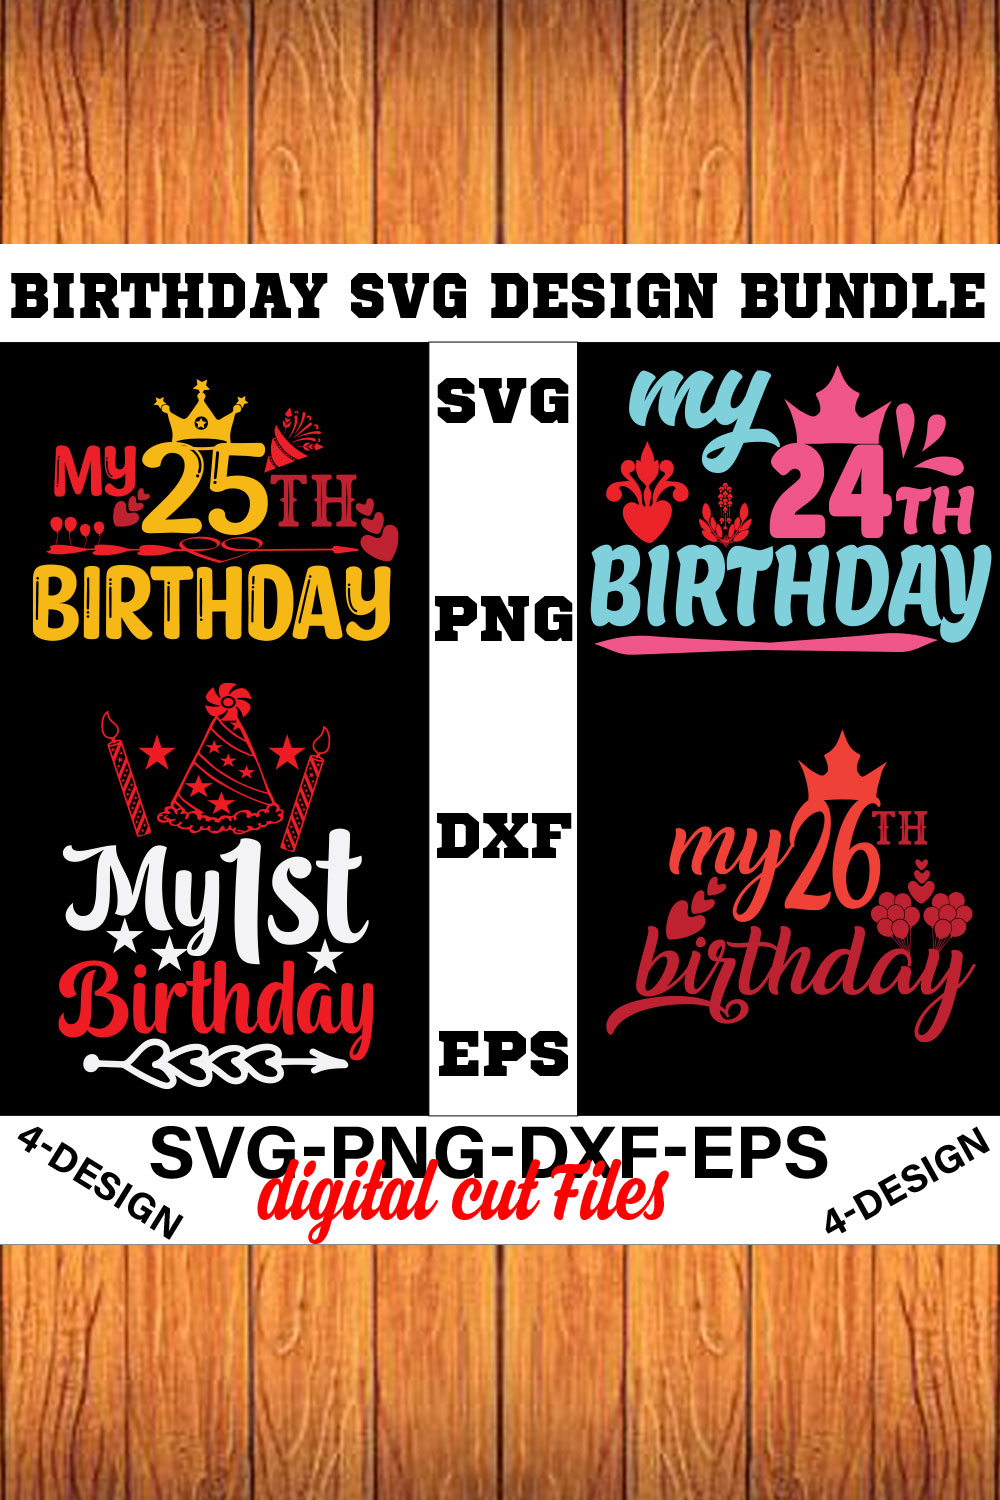 birthday svg design bundle Happy birthday svg bundle hand lettered birthday svg birthday party svg Volume-23 pinterest preview image.